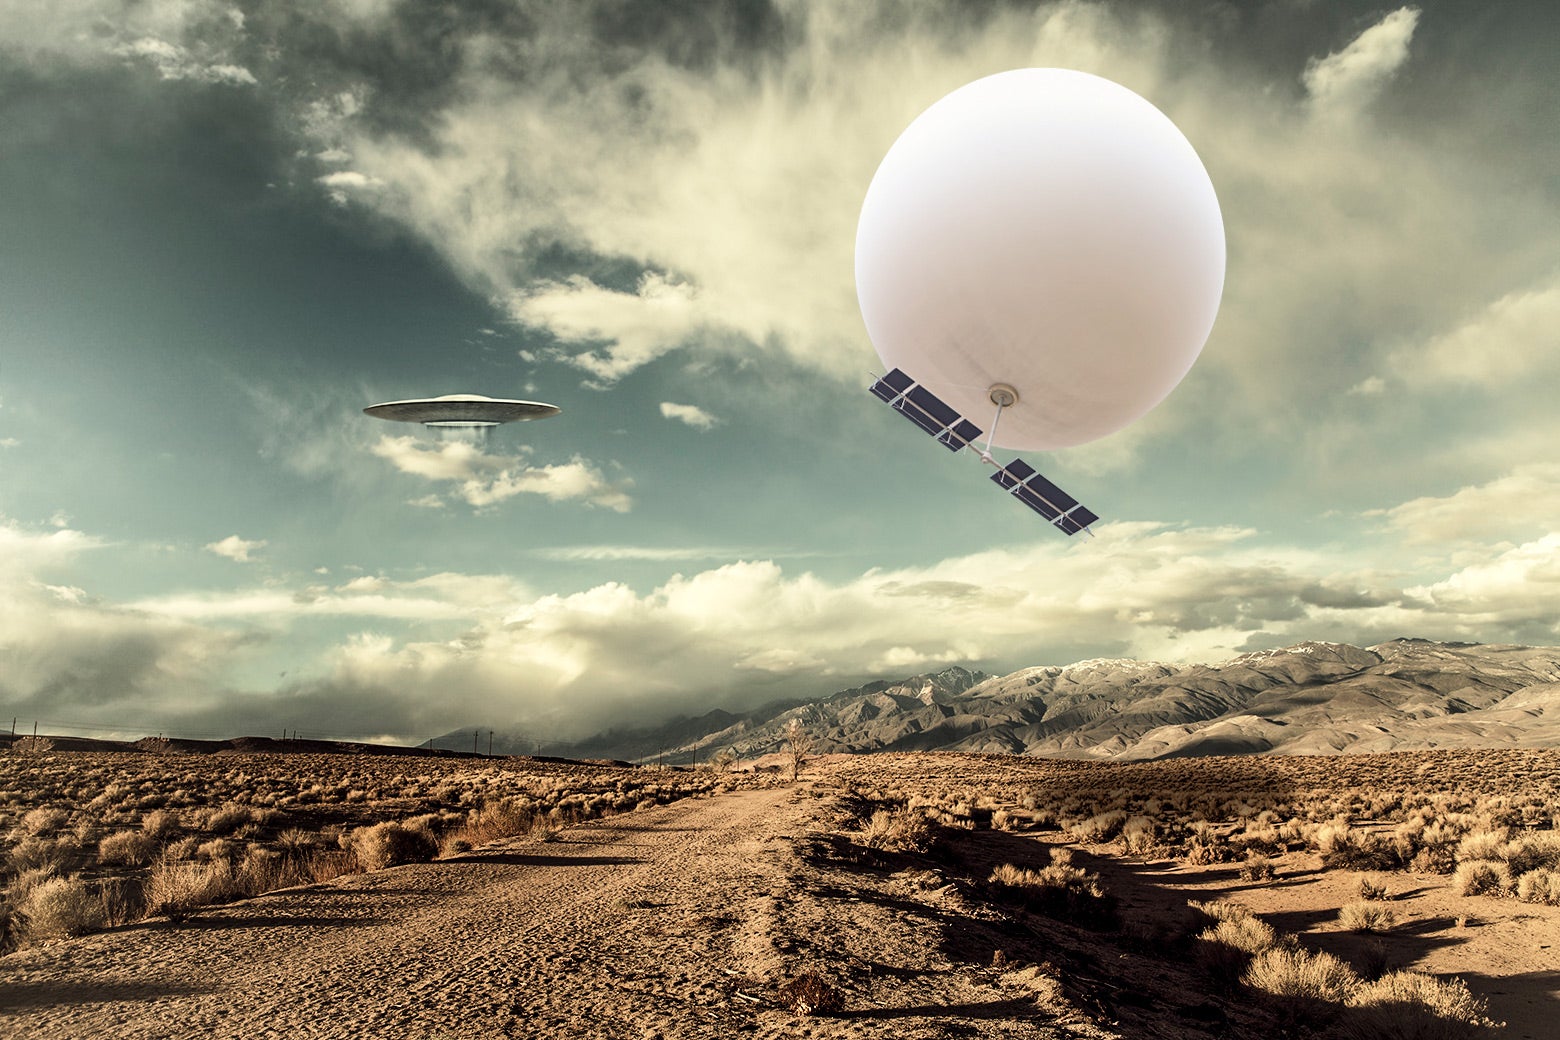 A surveillance balloon and a UFO over a desert.